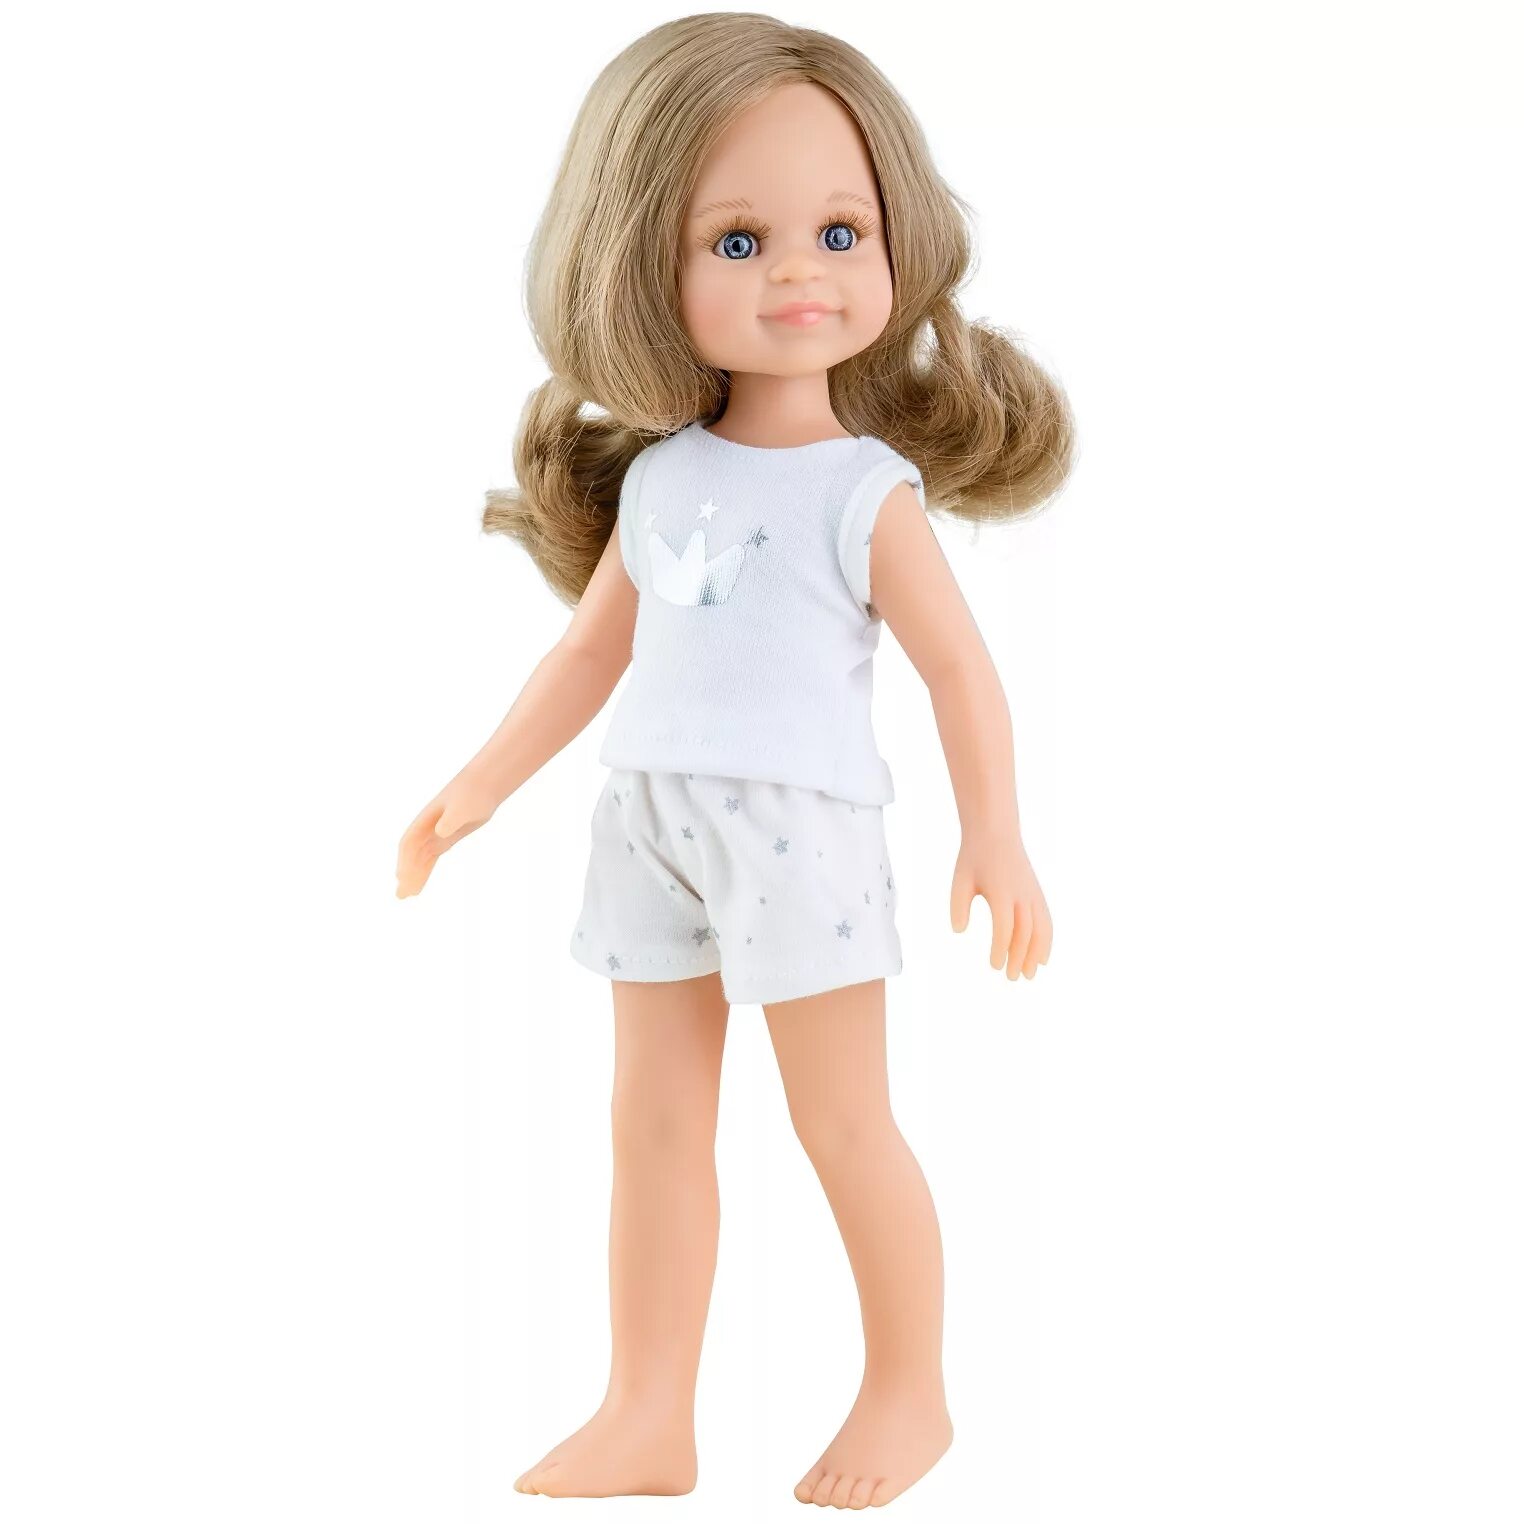 Кукла reina купить. Кукла Клео Паола Рейна. Кукла Paola Reina Клео в пижаме, 32 см, 13210. Клео 32 кукла Паола Рейна. Паола Рейна куклы 32 см.